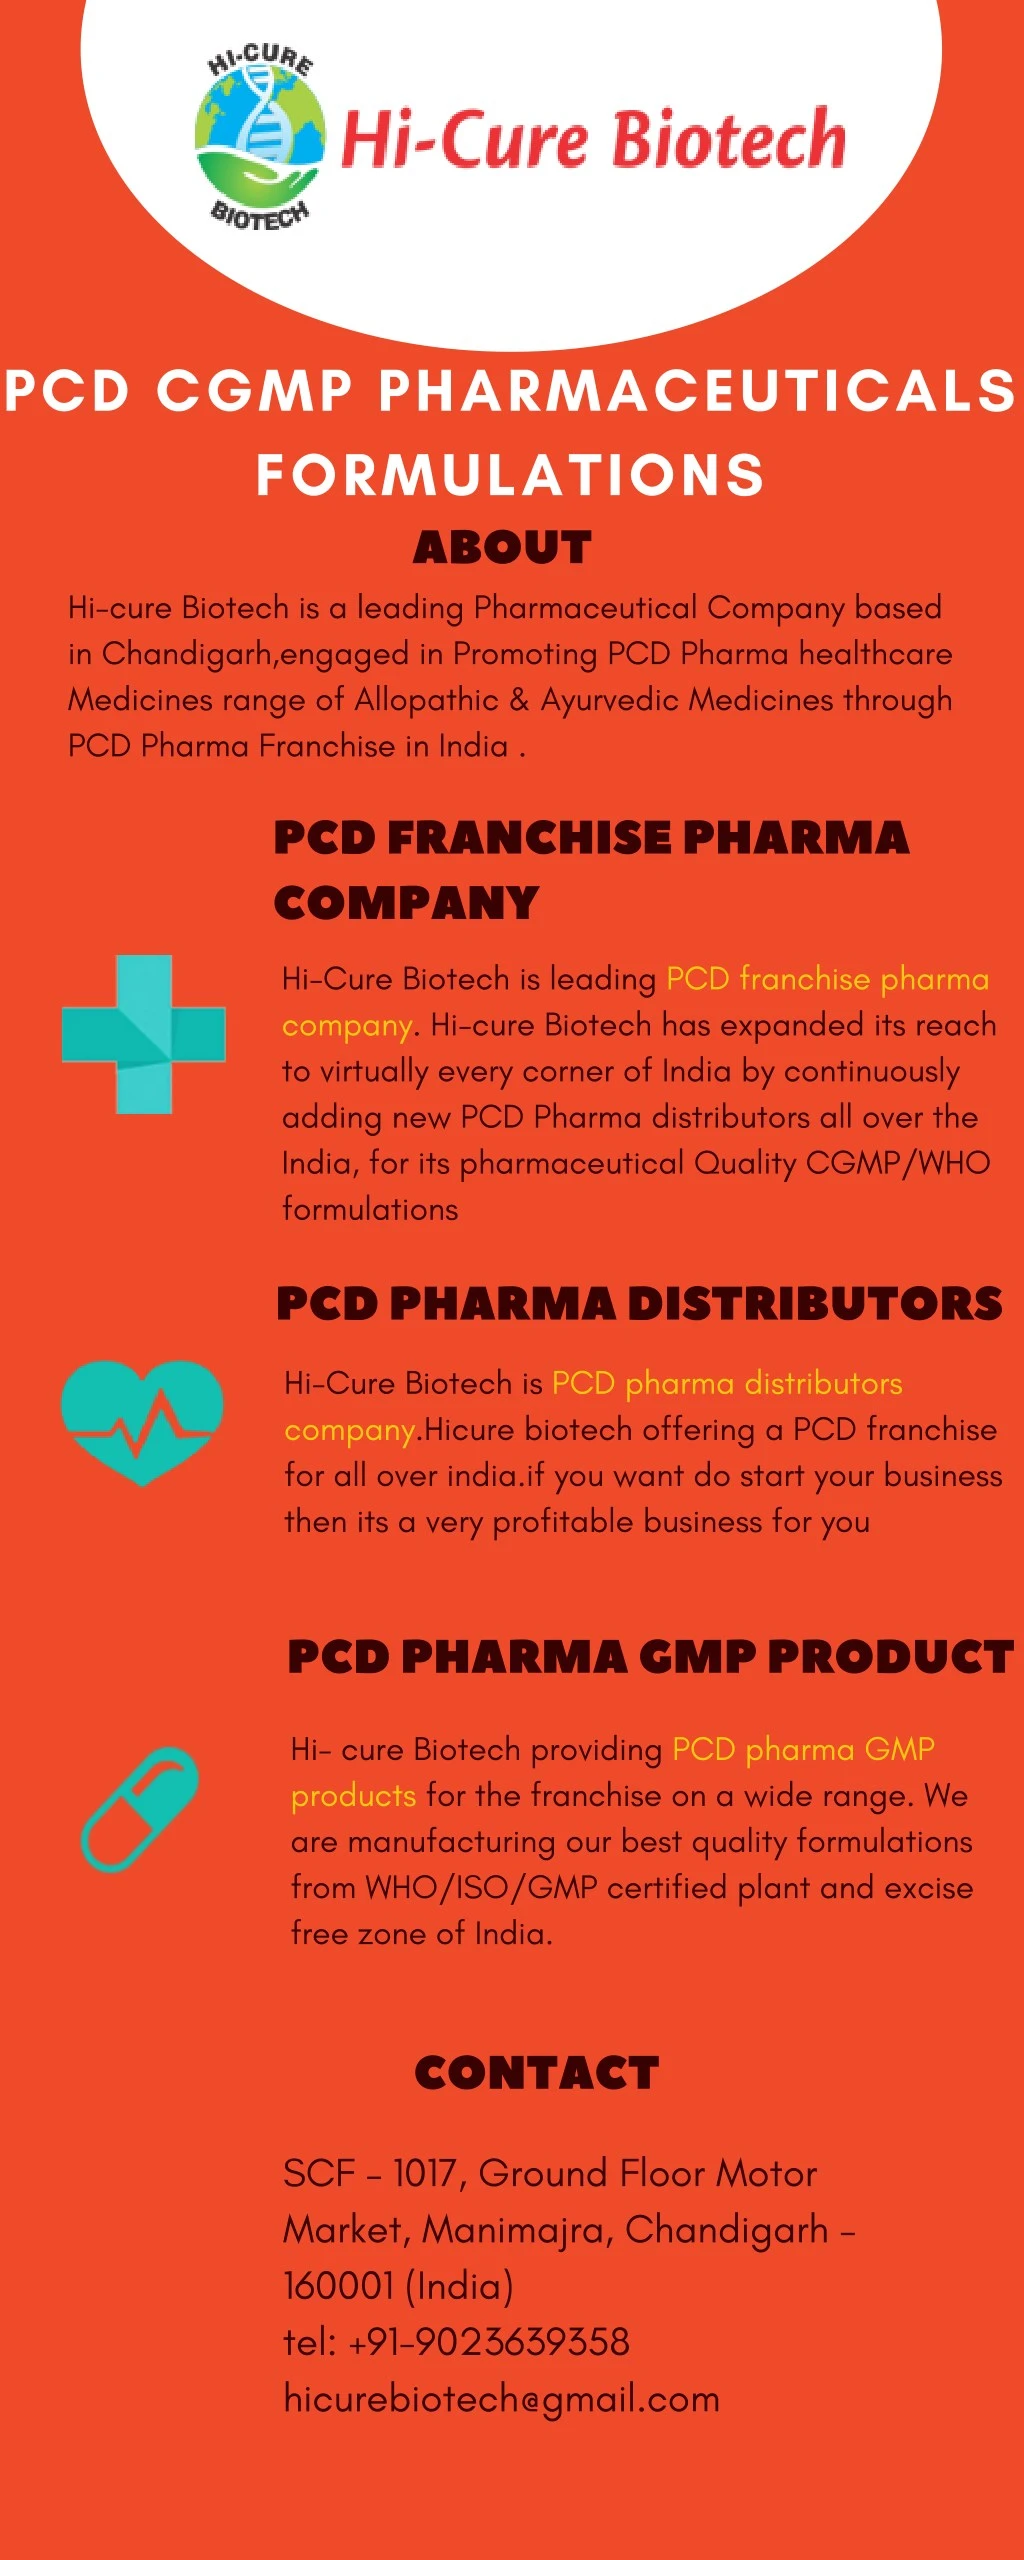 pcd cgmp pharmaceuticals